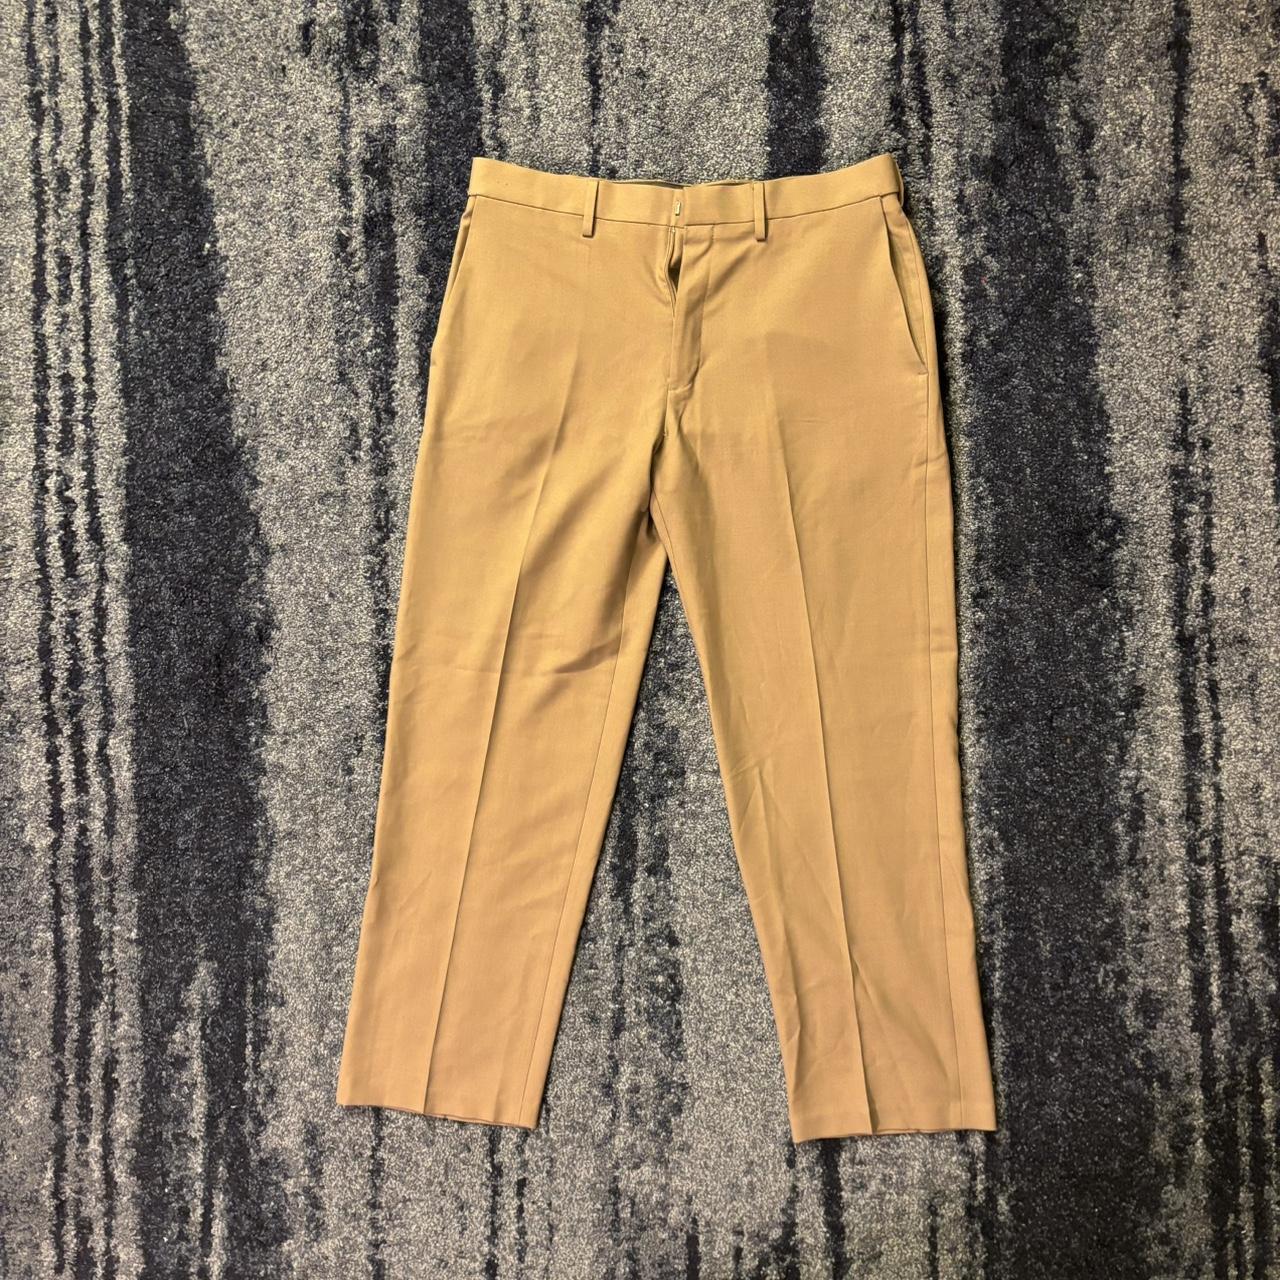 Haggar Men's Iron Free Premium Khaki Straight Fit Flat Front Flex Waist  Casual Pant Sand 30 x 30 at Amazon Men's Clothing store